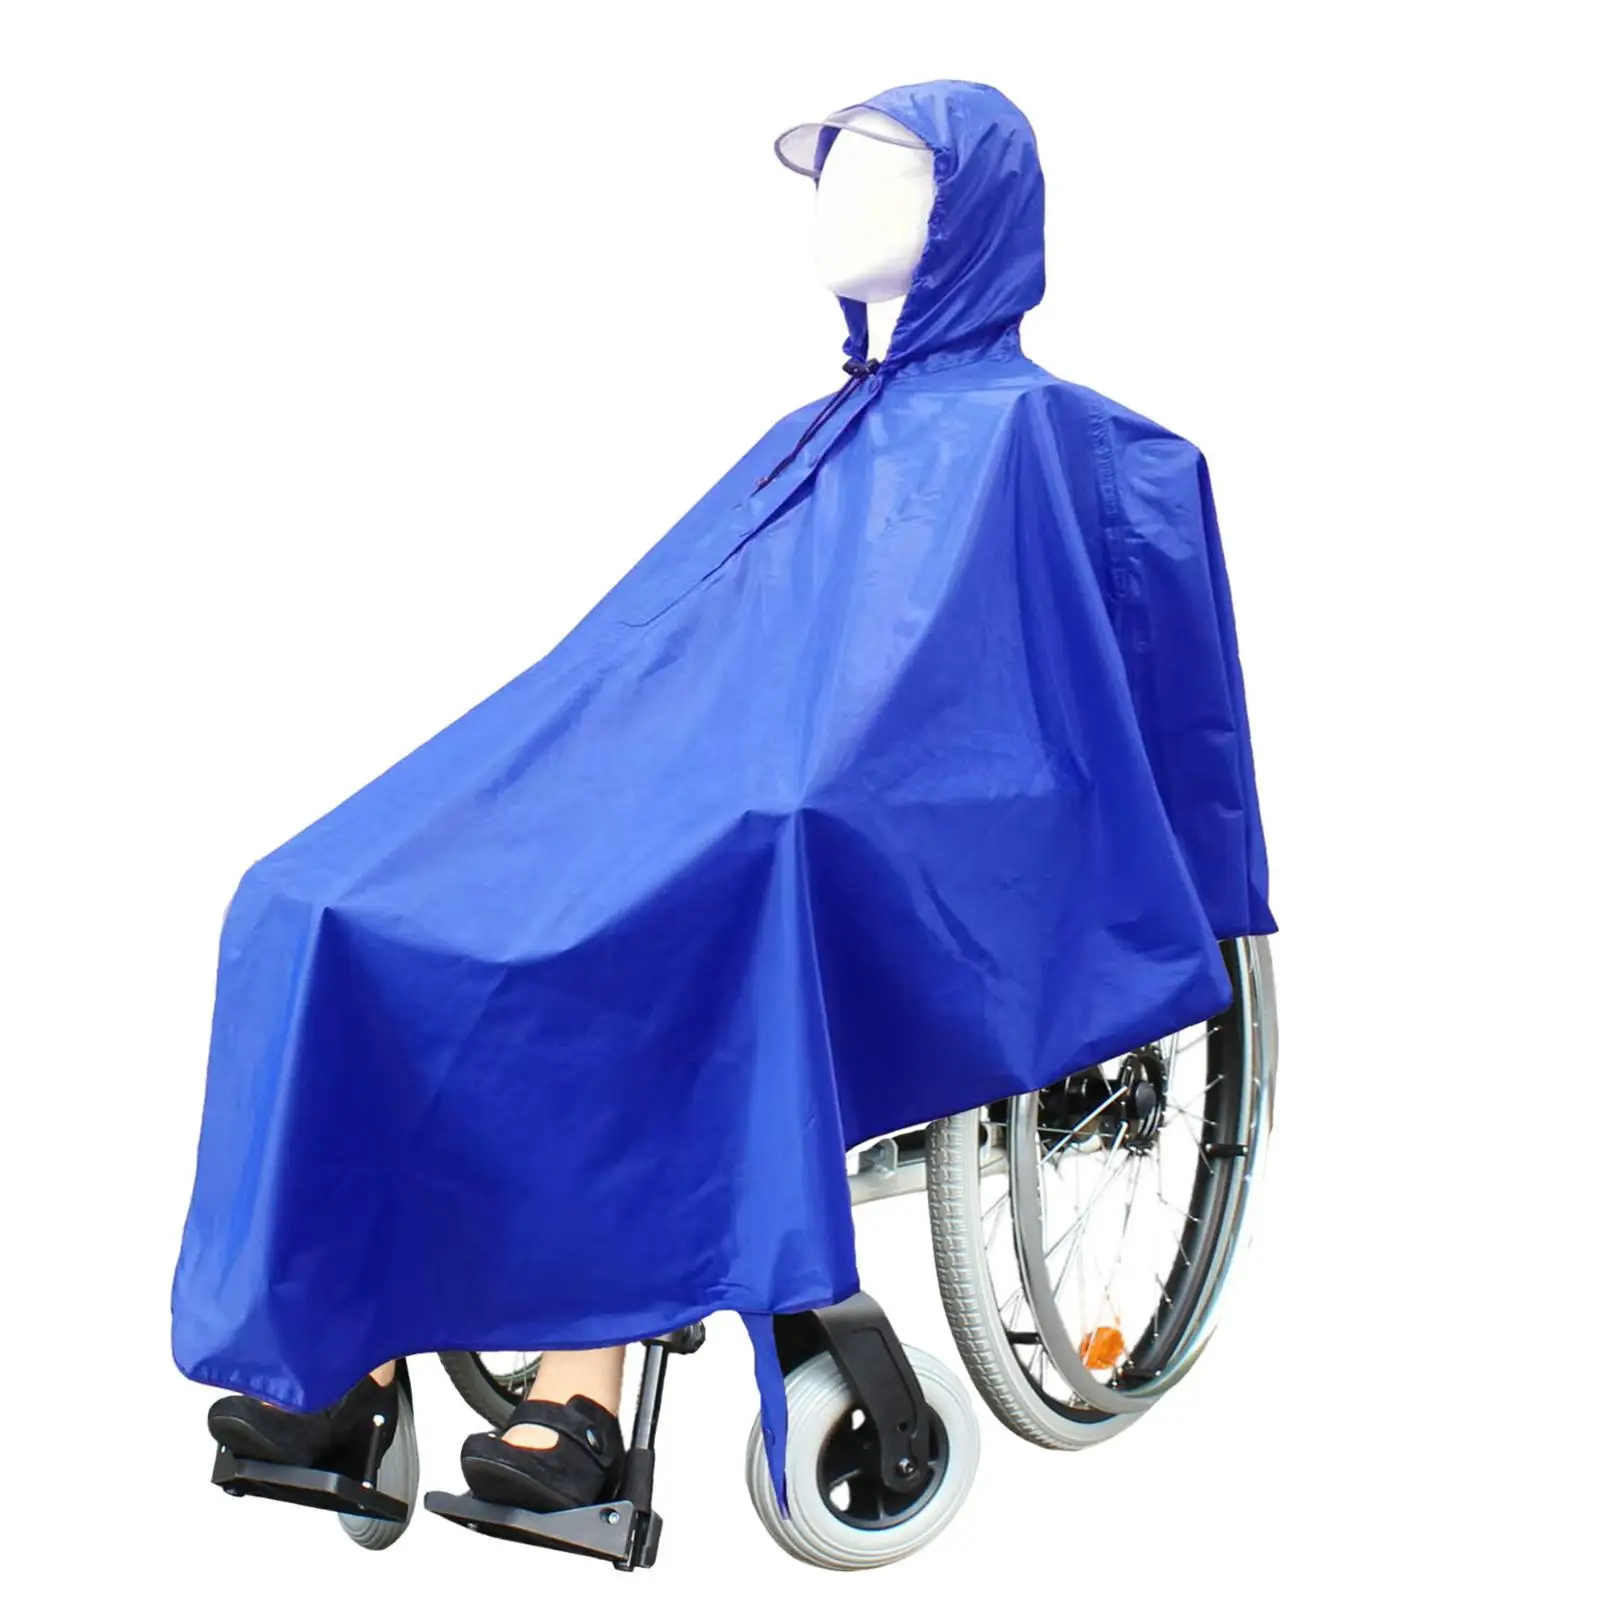 Wheelchair Poncho Reflective Strip Activity Reusable Rain Protection Cape